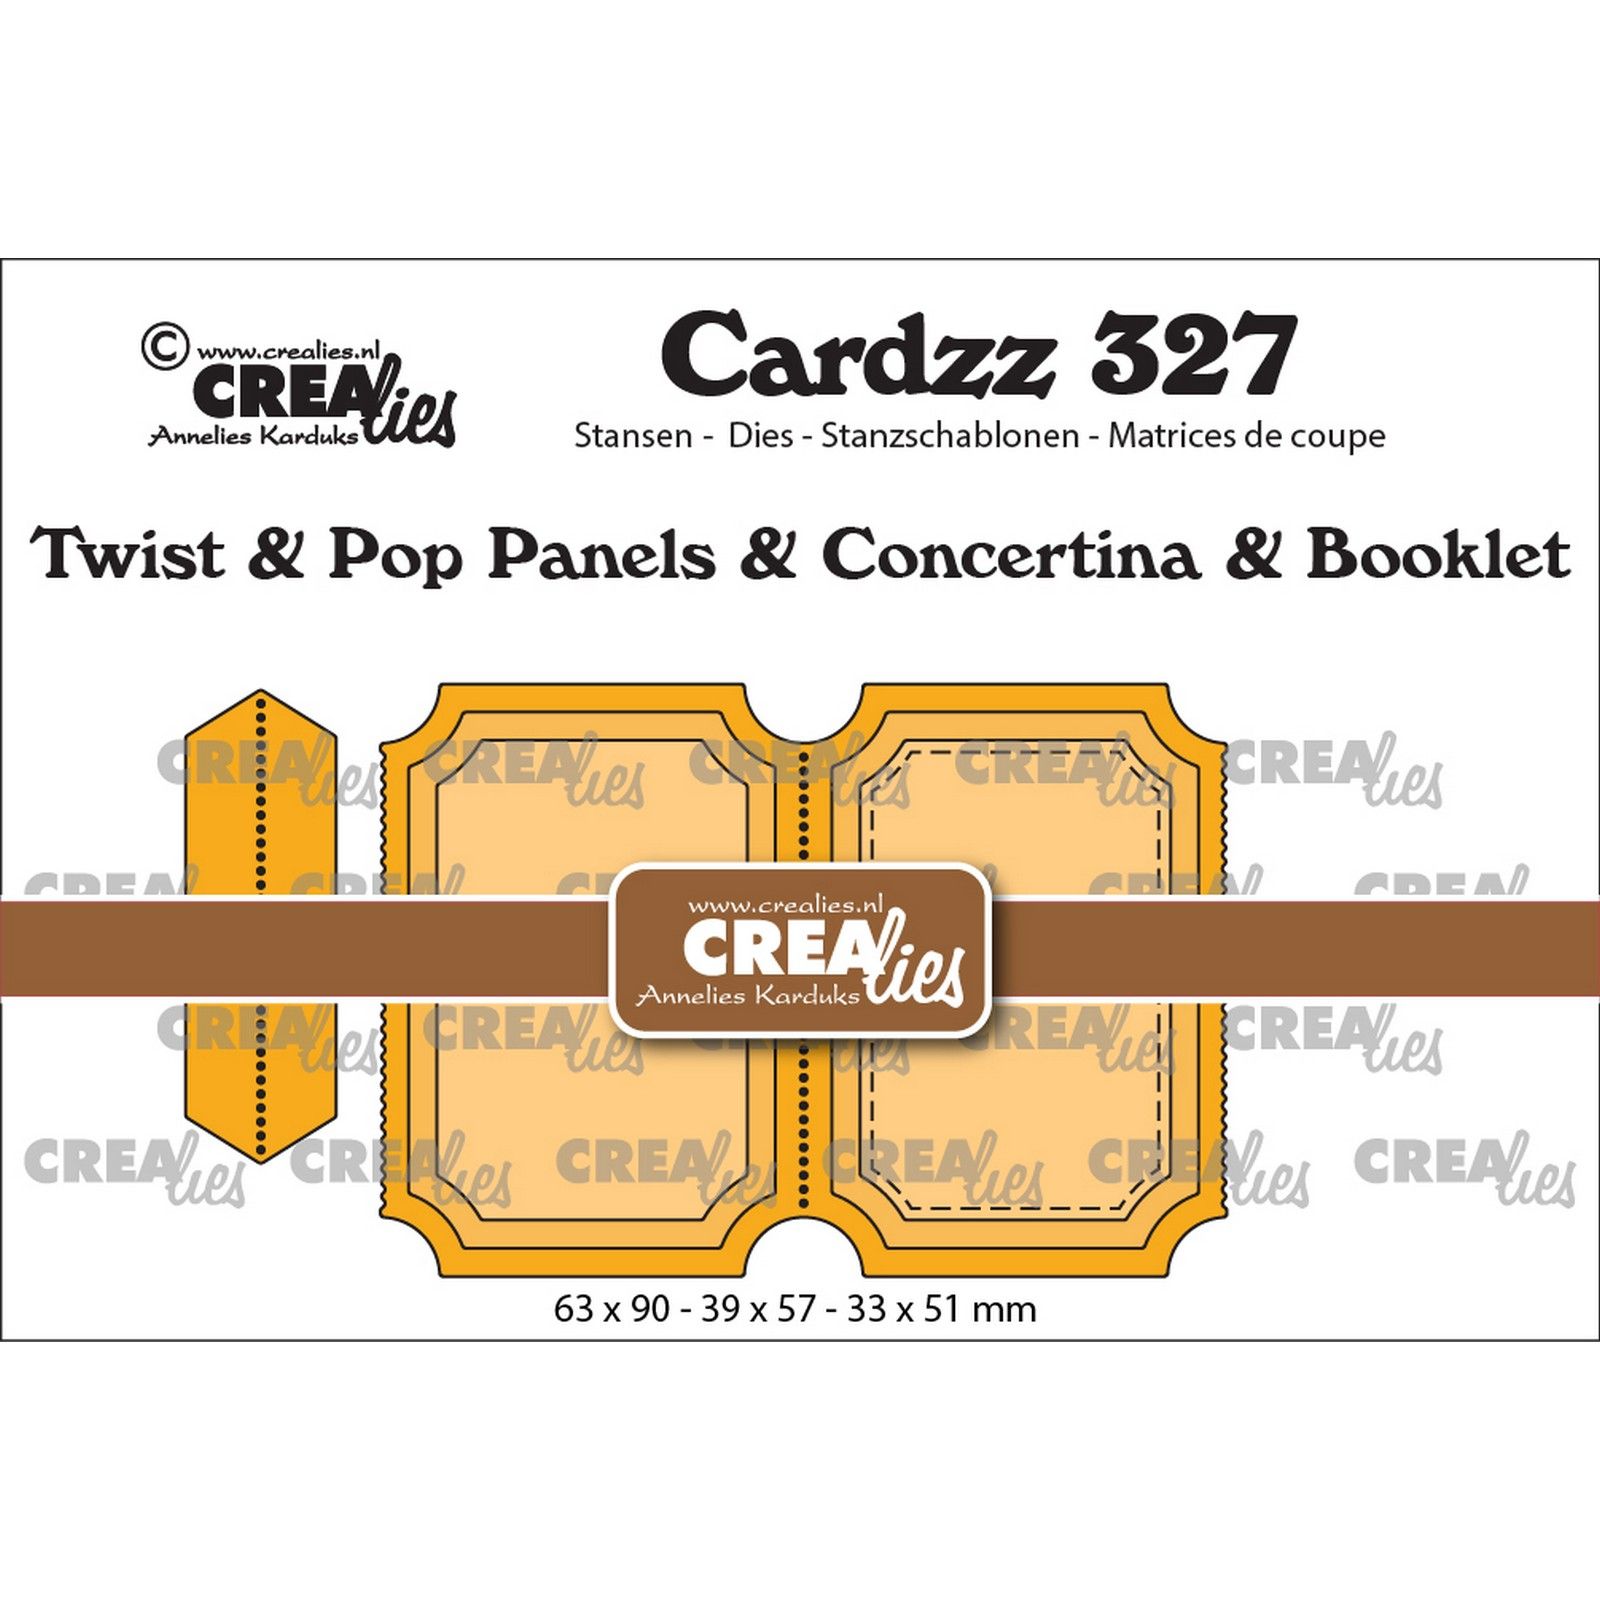 Crealies • Cardzz Twist & Pop B3, Panels & Concertina & Booklet Tickets Vertical